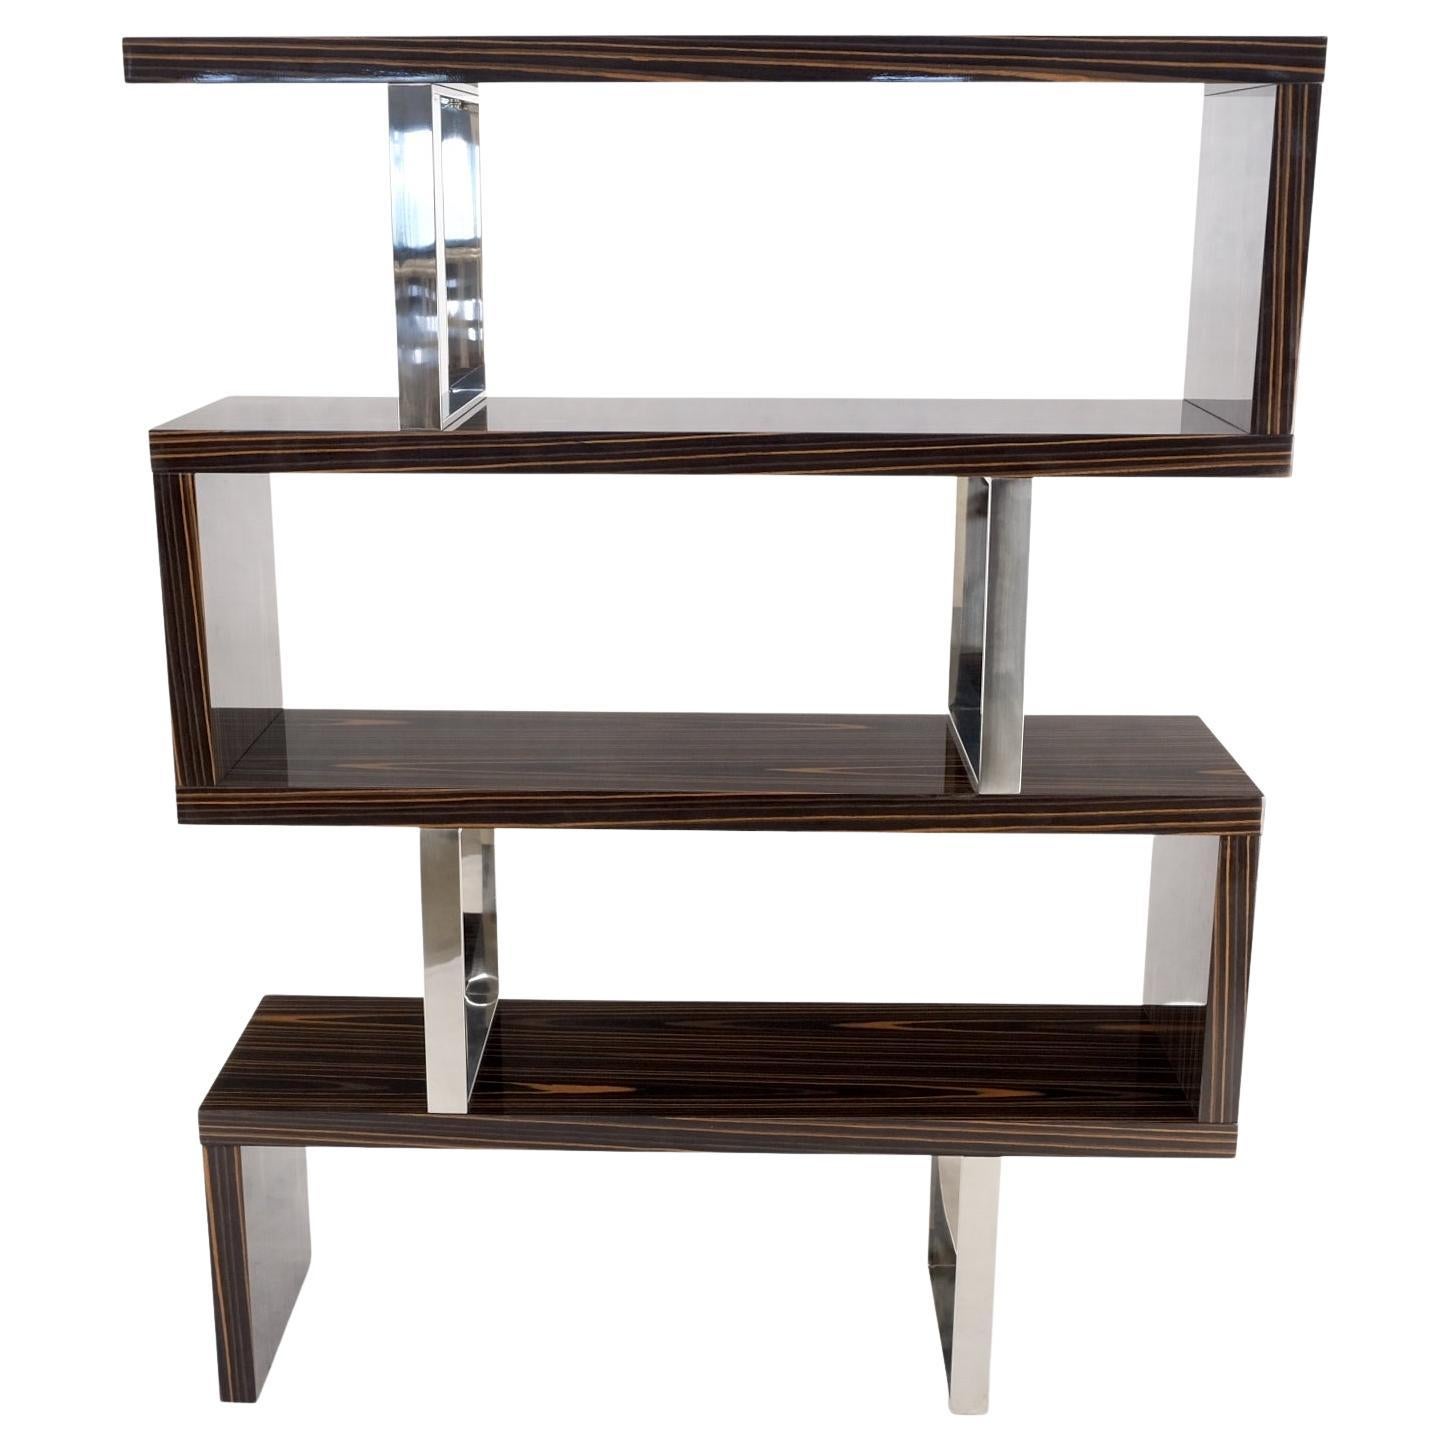 Post Modern Custom Design Zebra Wood & Chrome Etagere bookcase shelf wall unit.